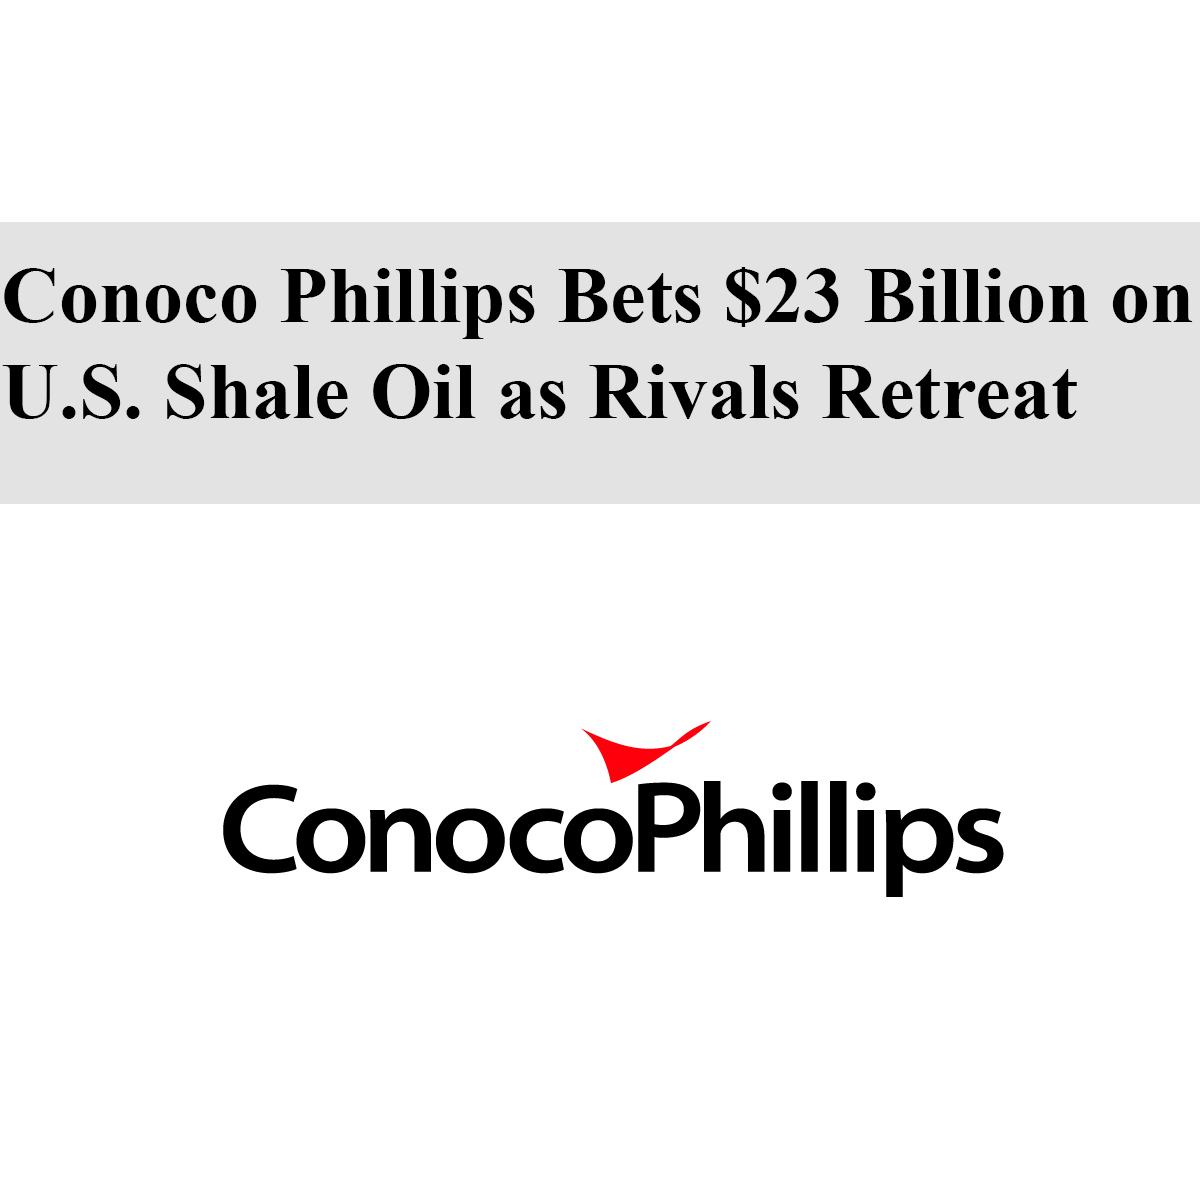 Conoco Phillips Bets $23 Billion on U.S. Shale Oil as Rivals Retreat